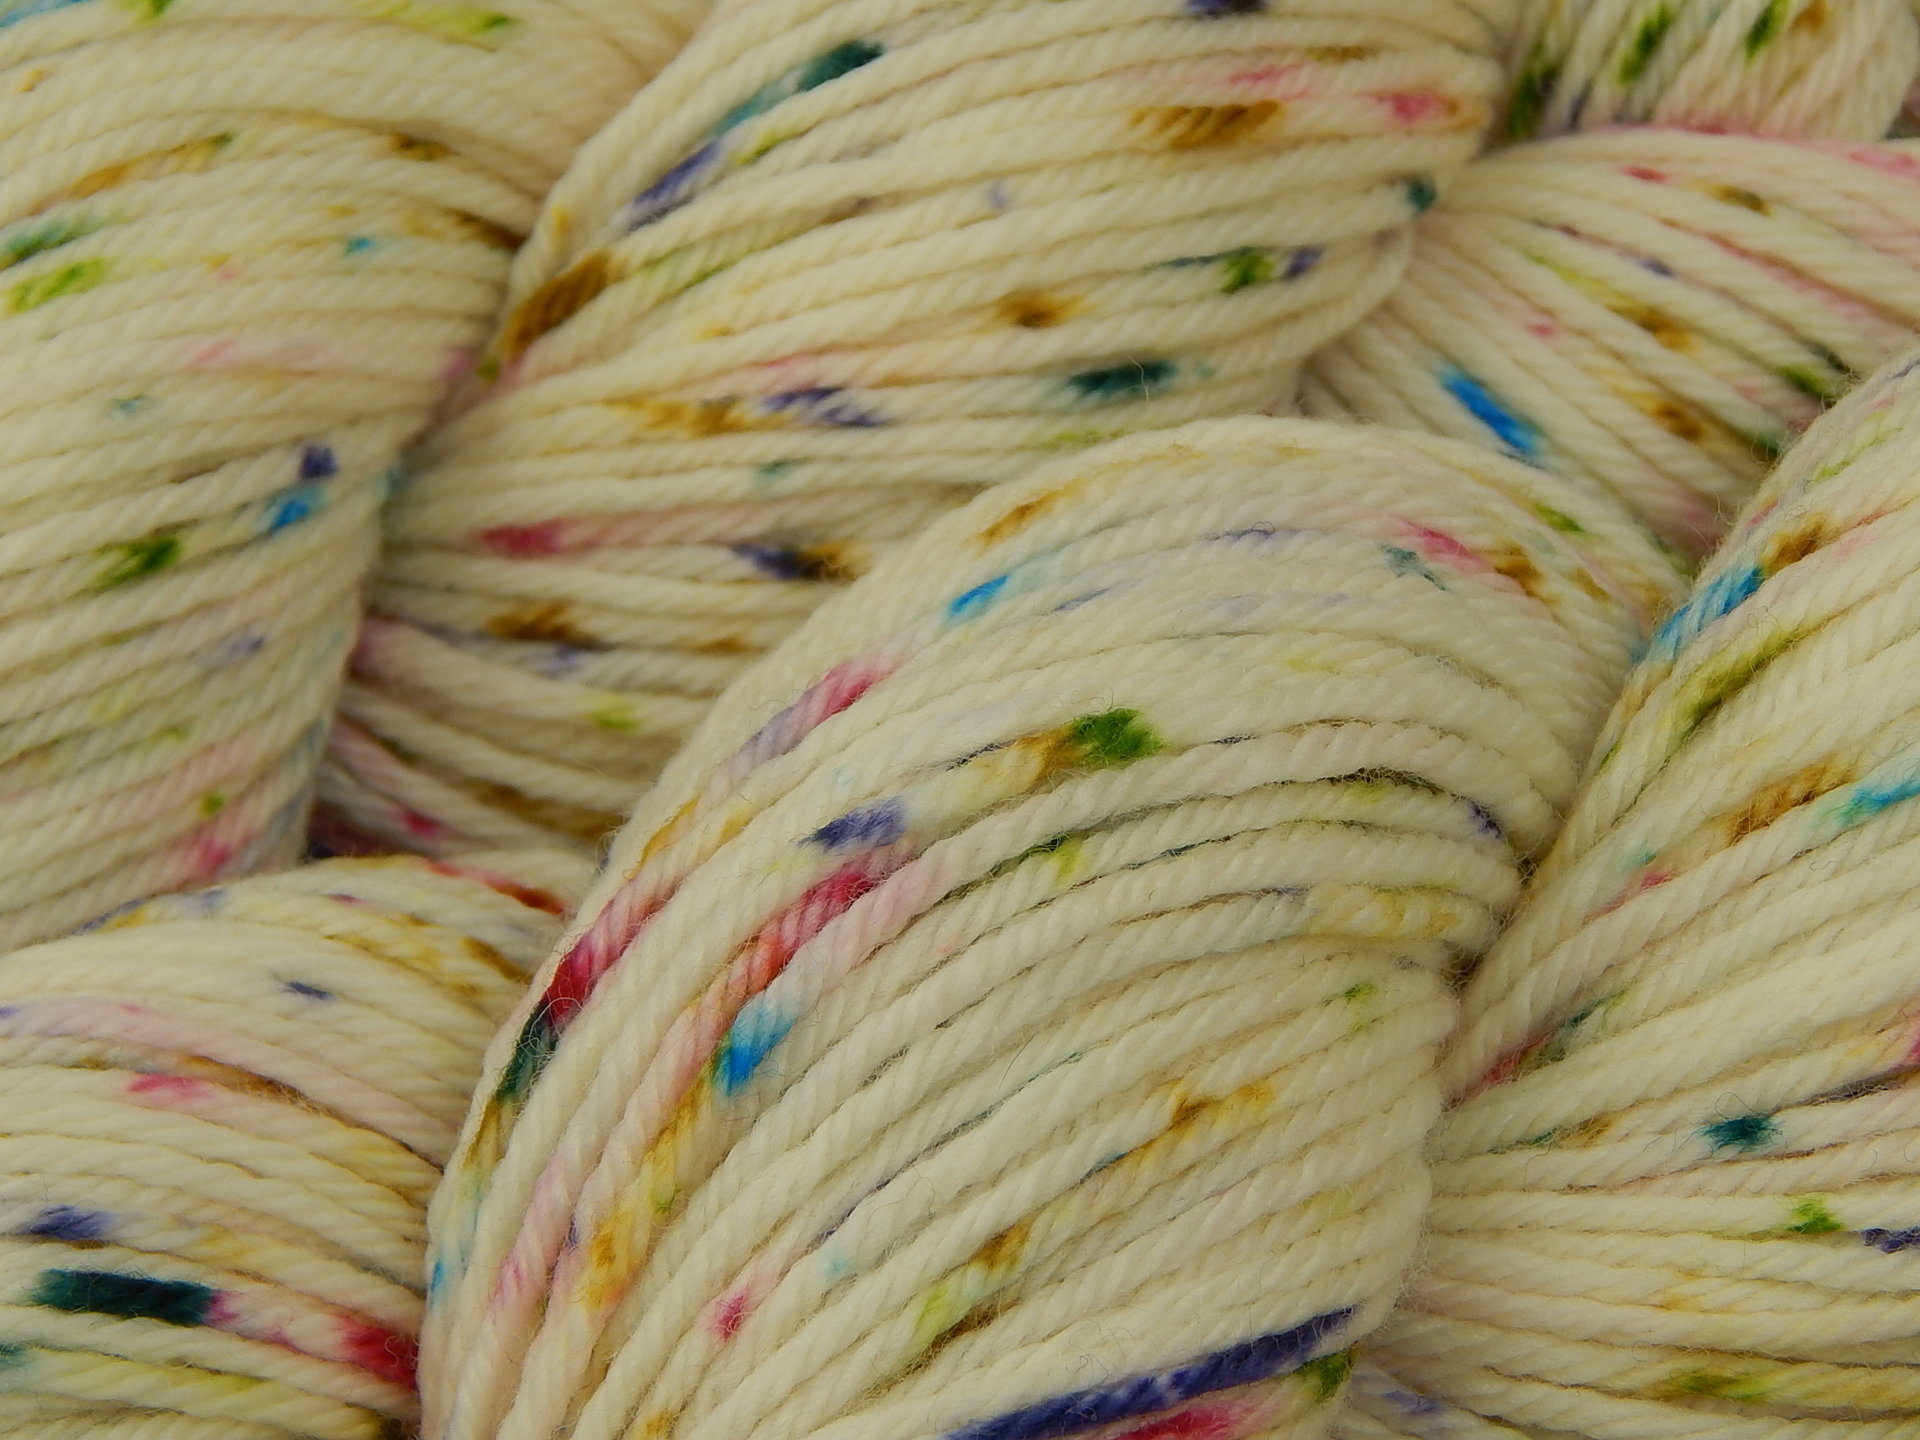 Worsted Weight Hand Dyed Yarn, 100% Superwash Merino Wool - Potluck Confetti - Indie Dyer Off White Rainbow Speckled Cream Knitting Yarn